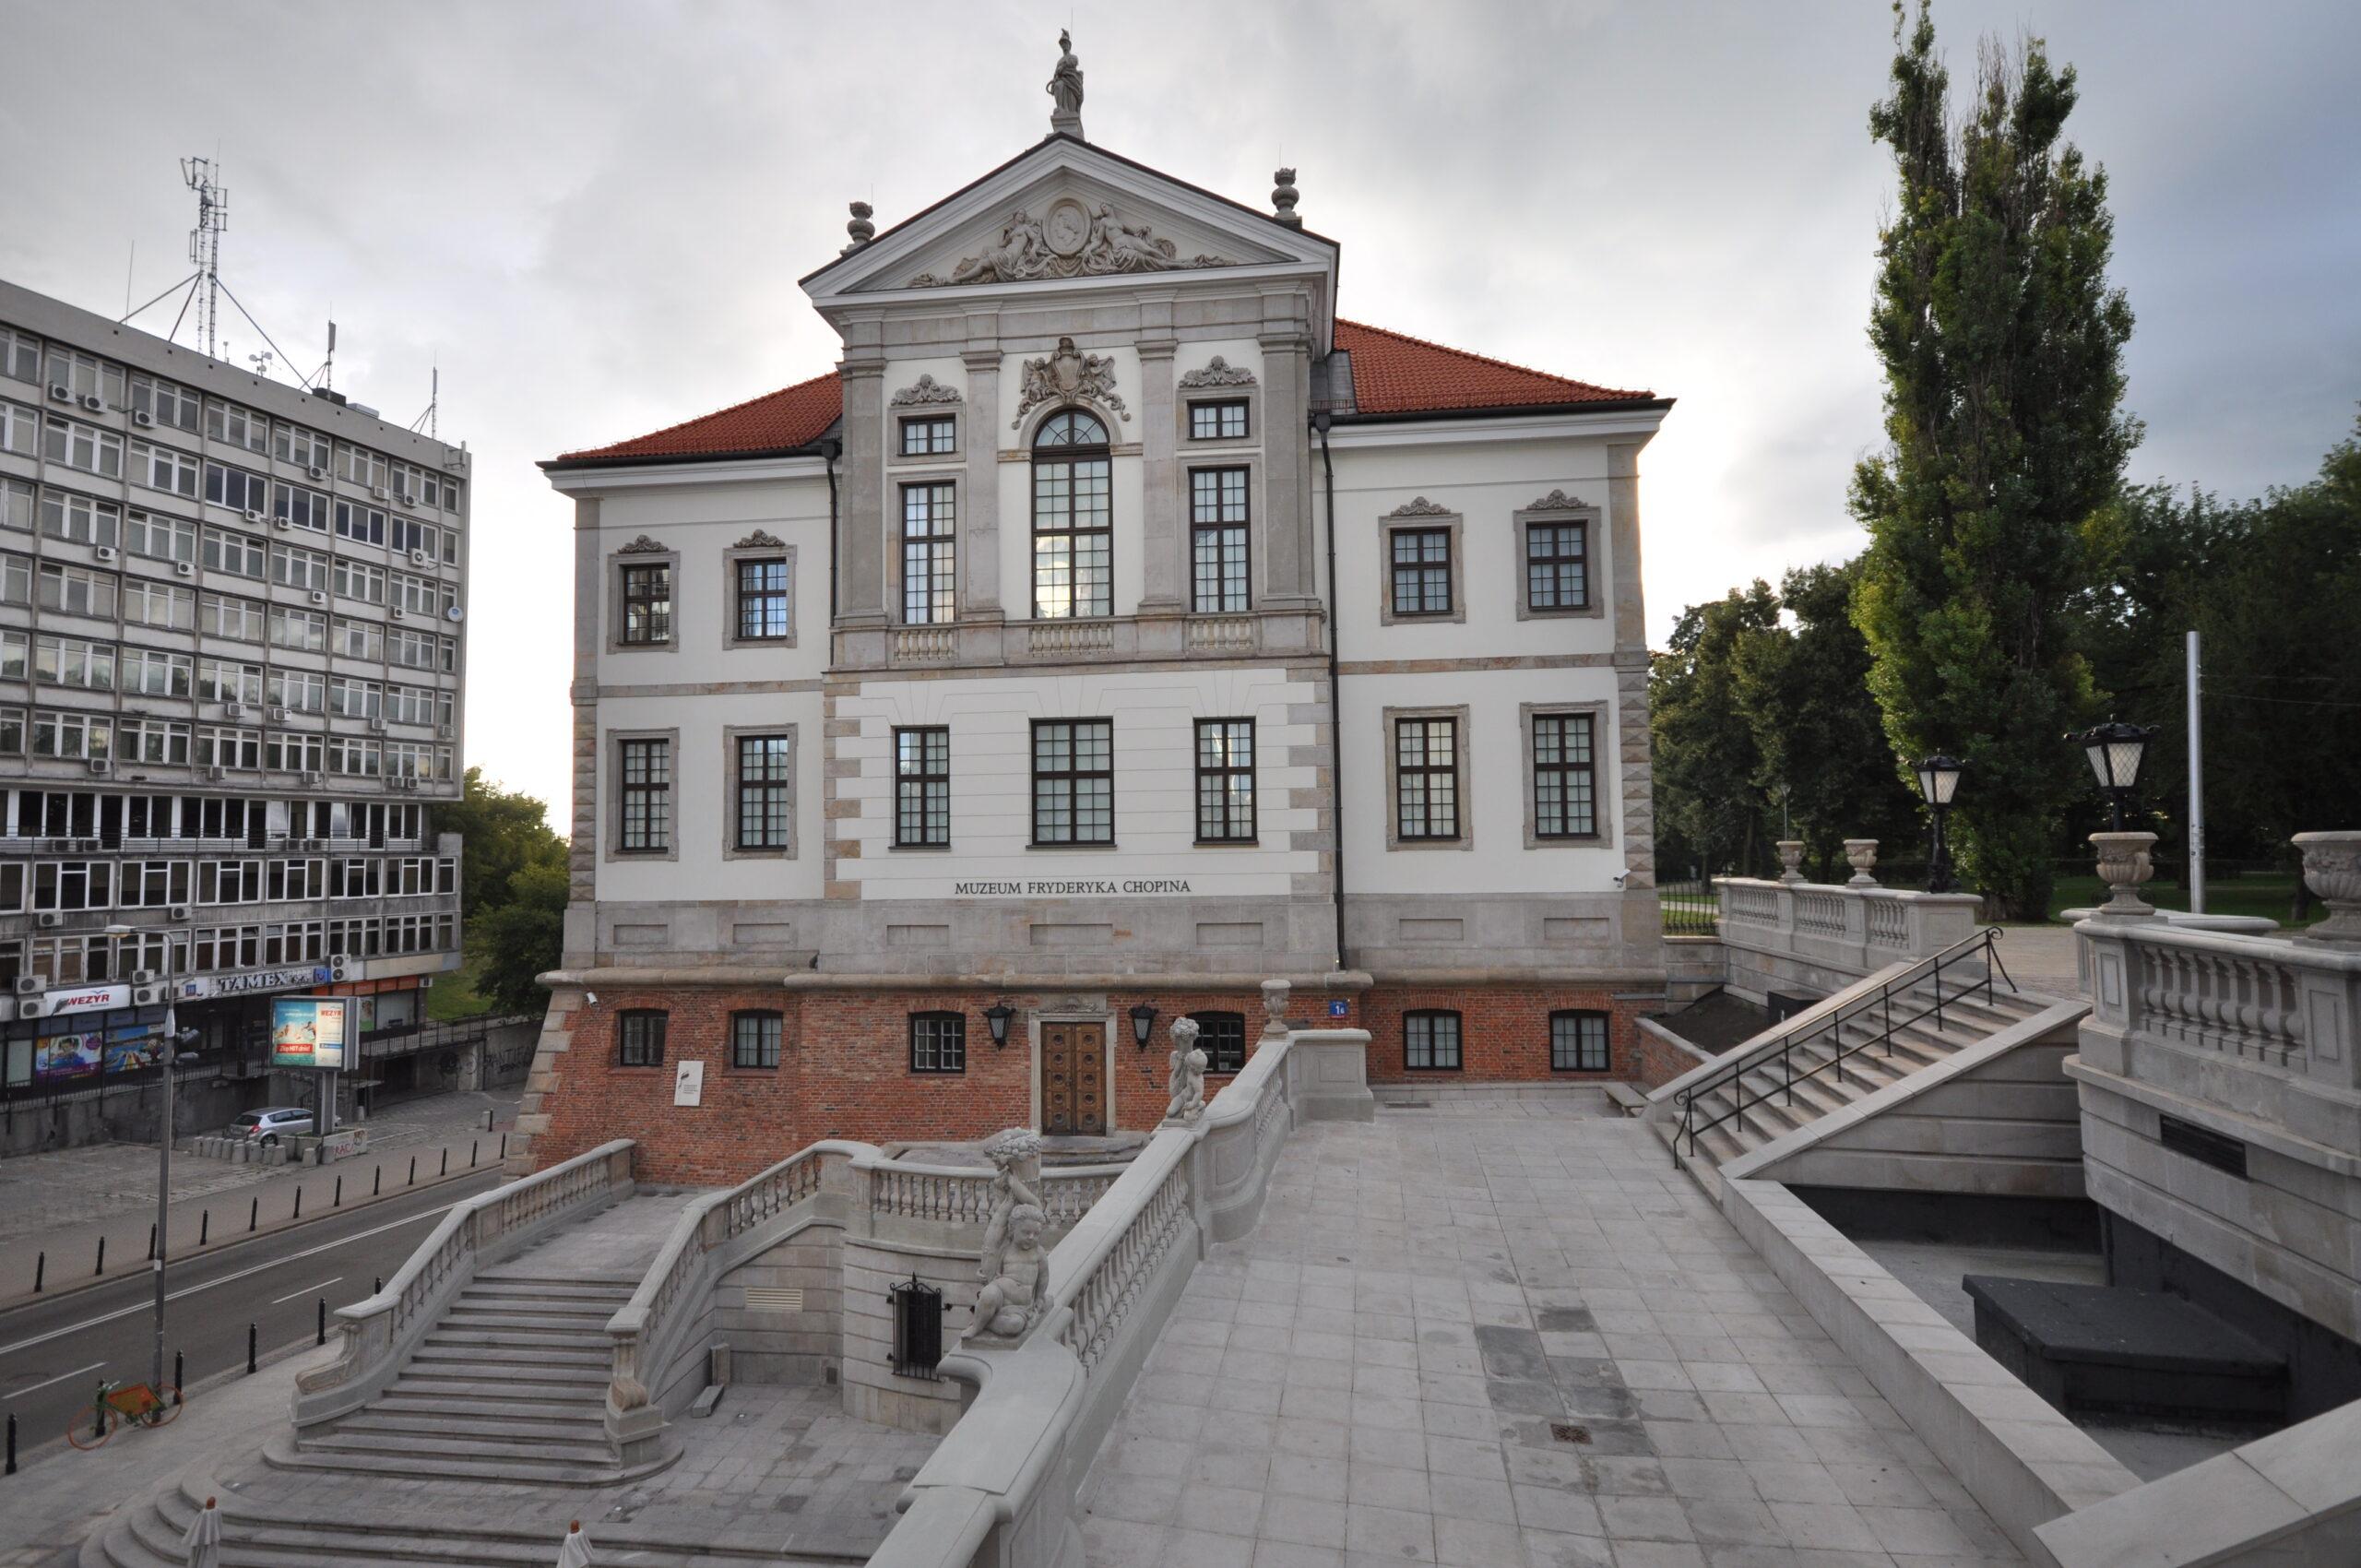 The Fryderyk Chopin Museum